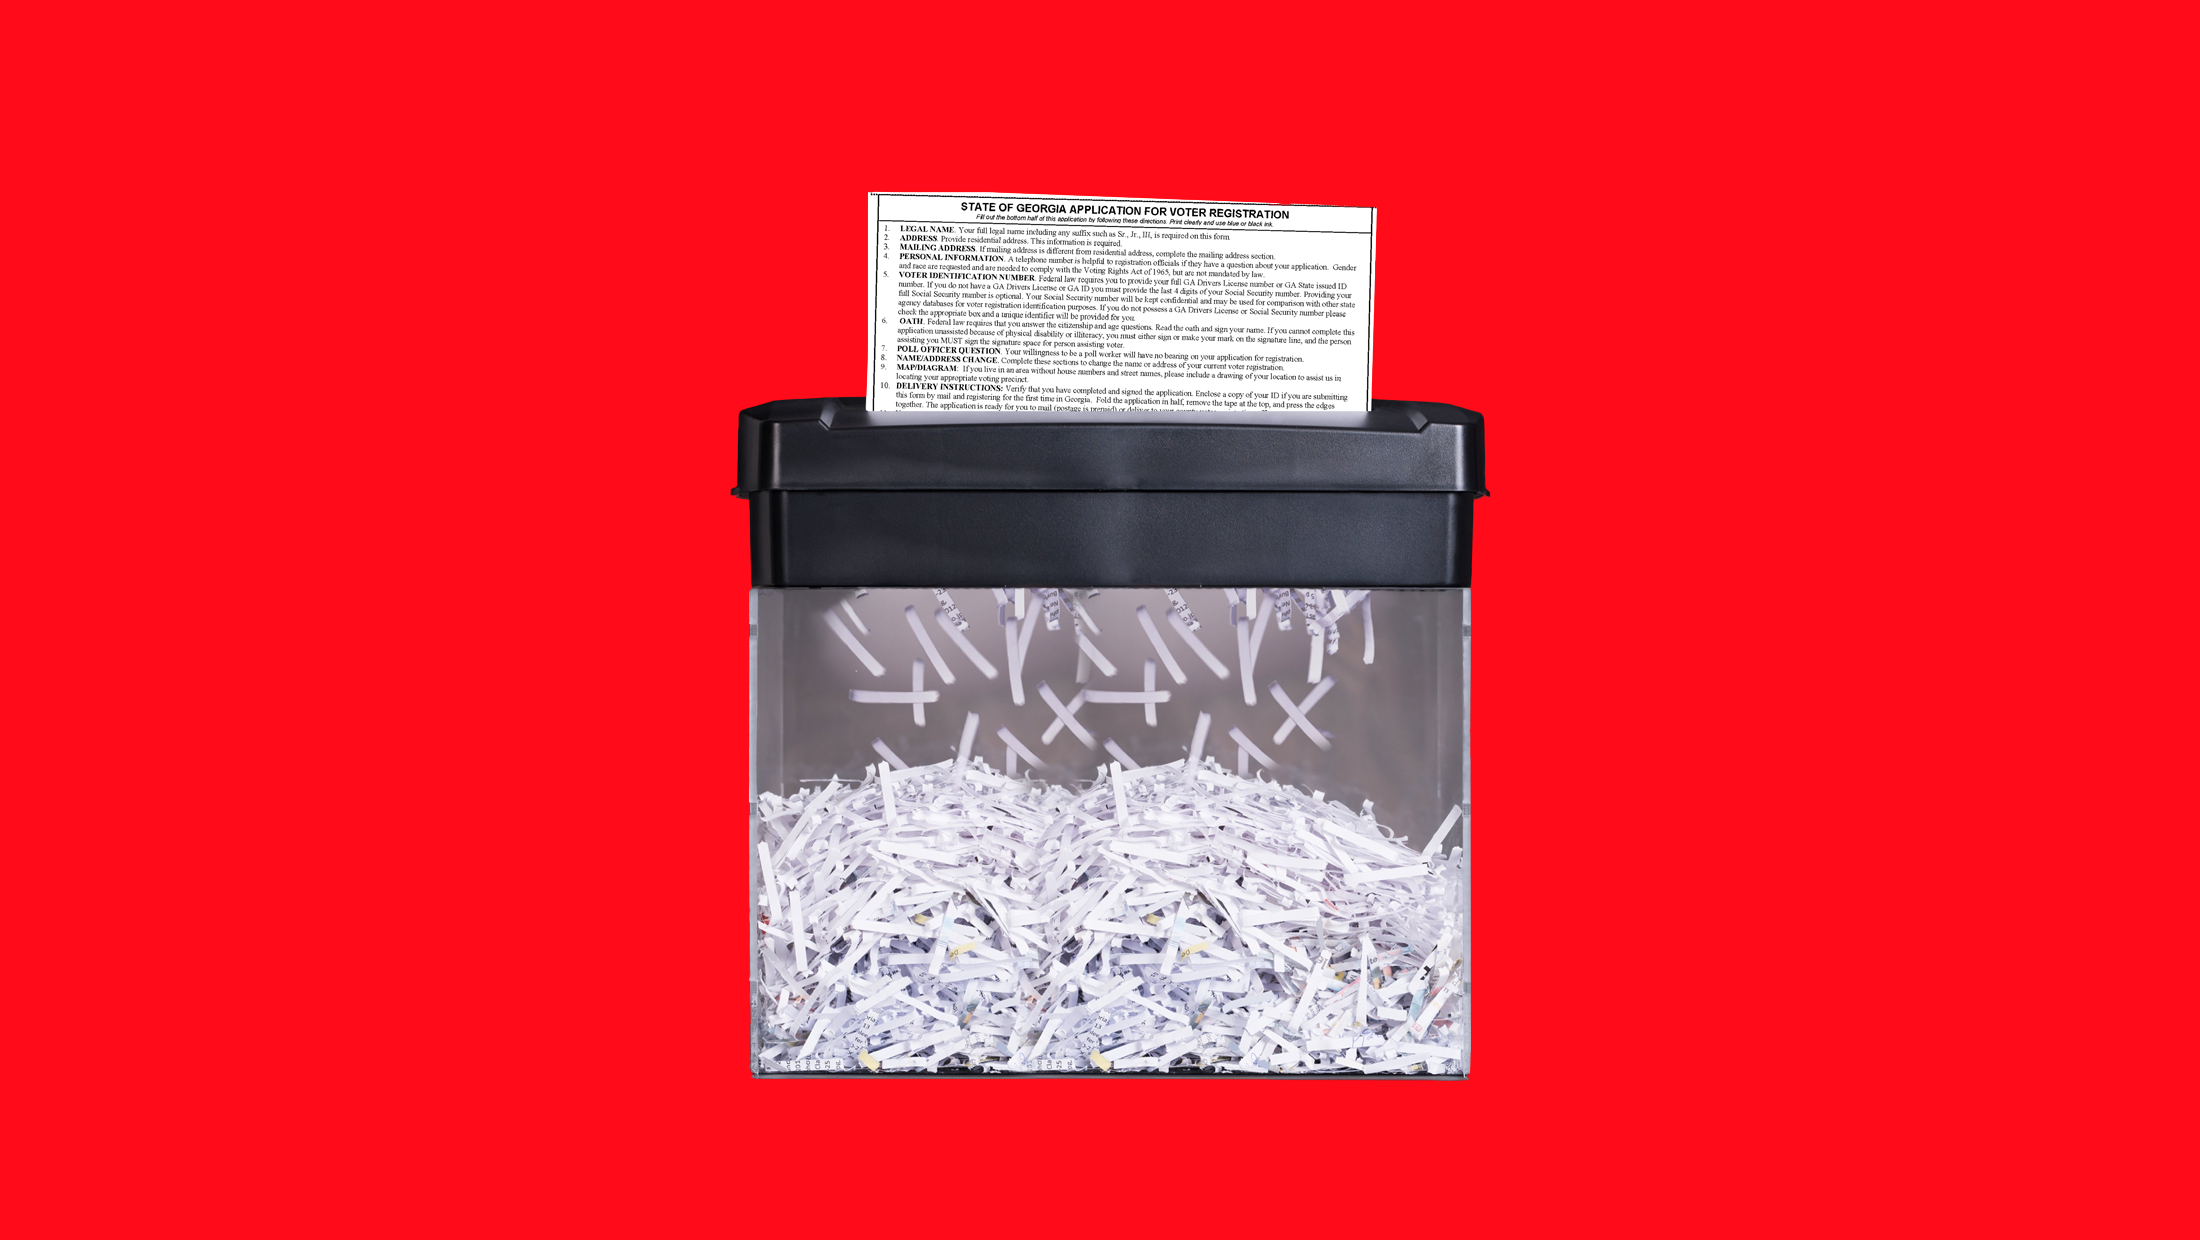 A paper shredder shredding a Georgia voter registration application